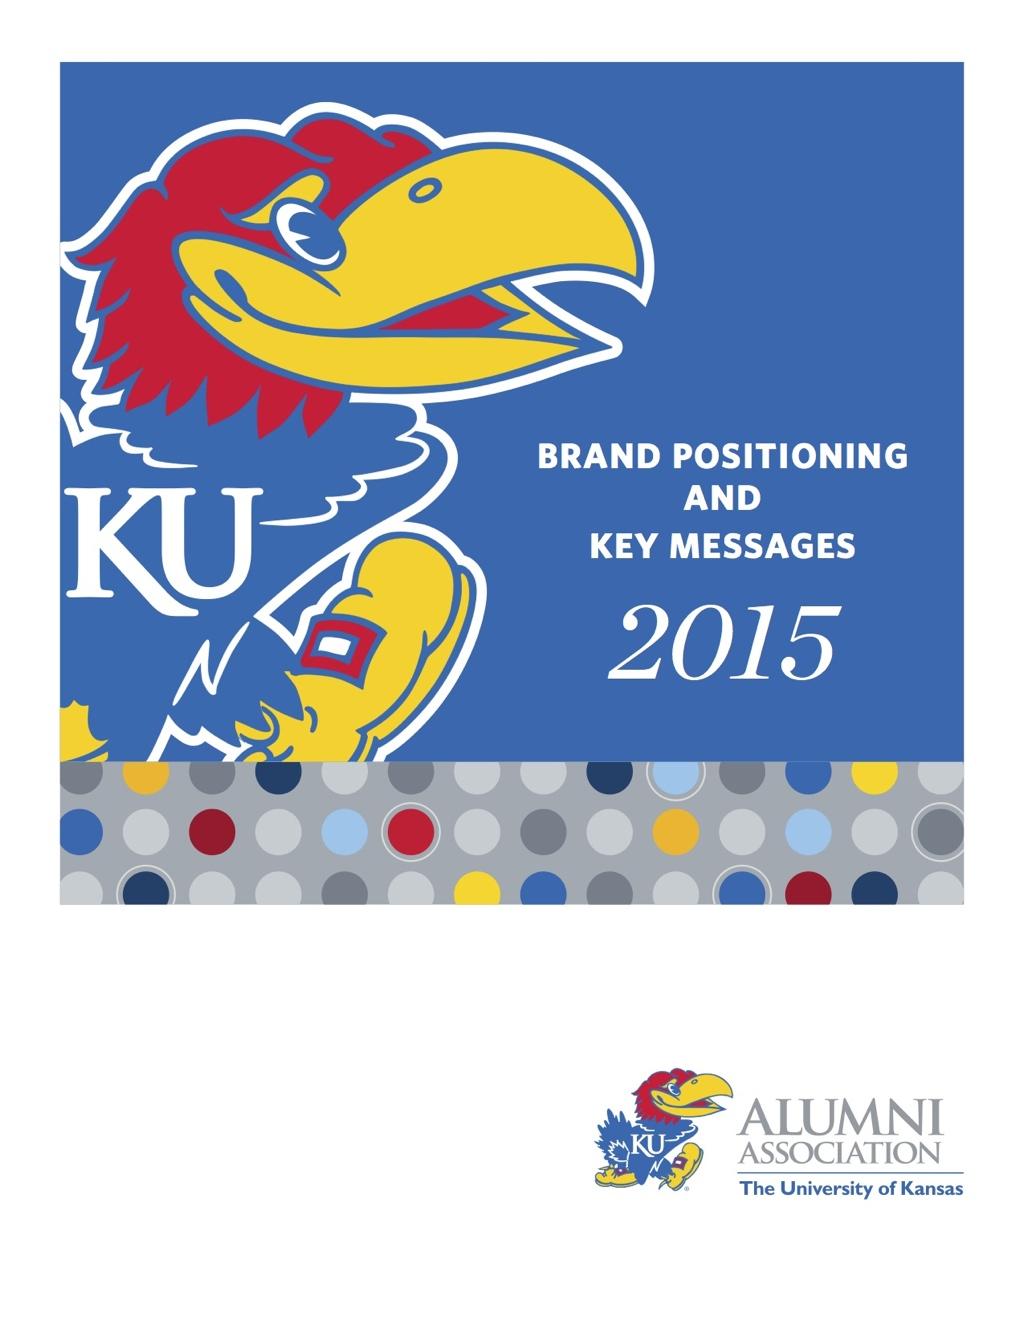 http://www.kualumni.org/pdf/keymessages_kuaa_2015.